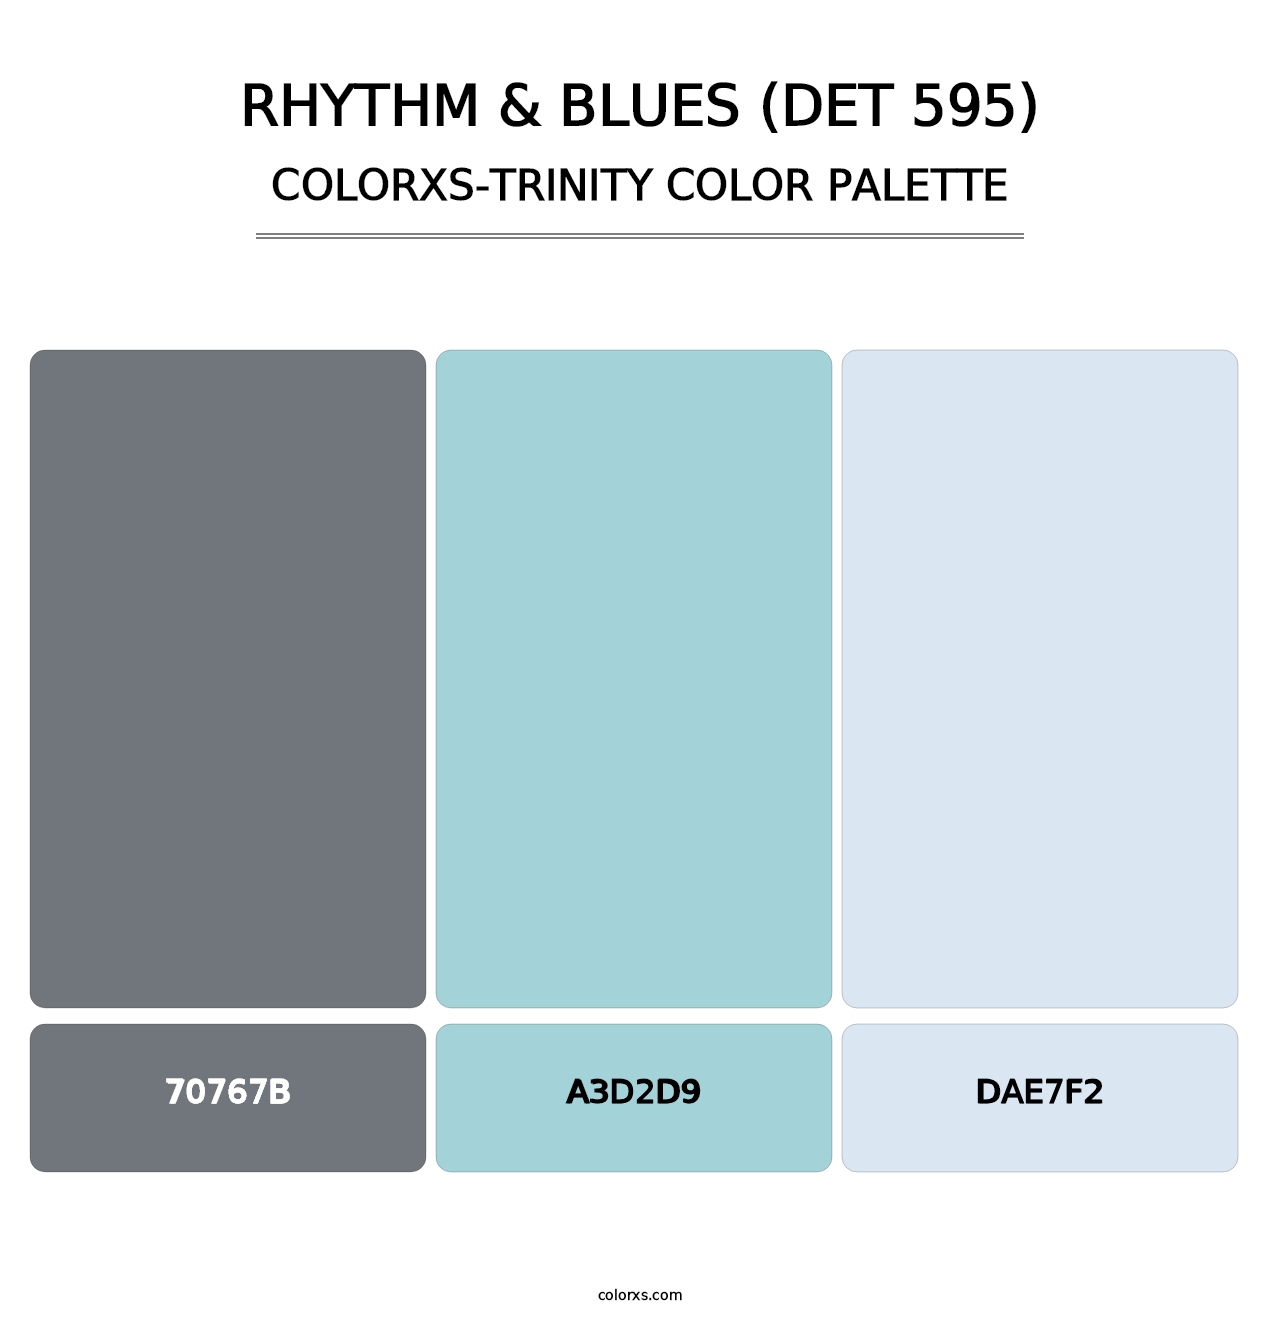 Rhythm & Blues (DET 595) - Colorxs Trinity Palette